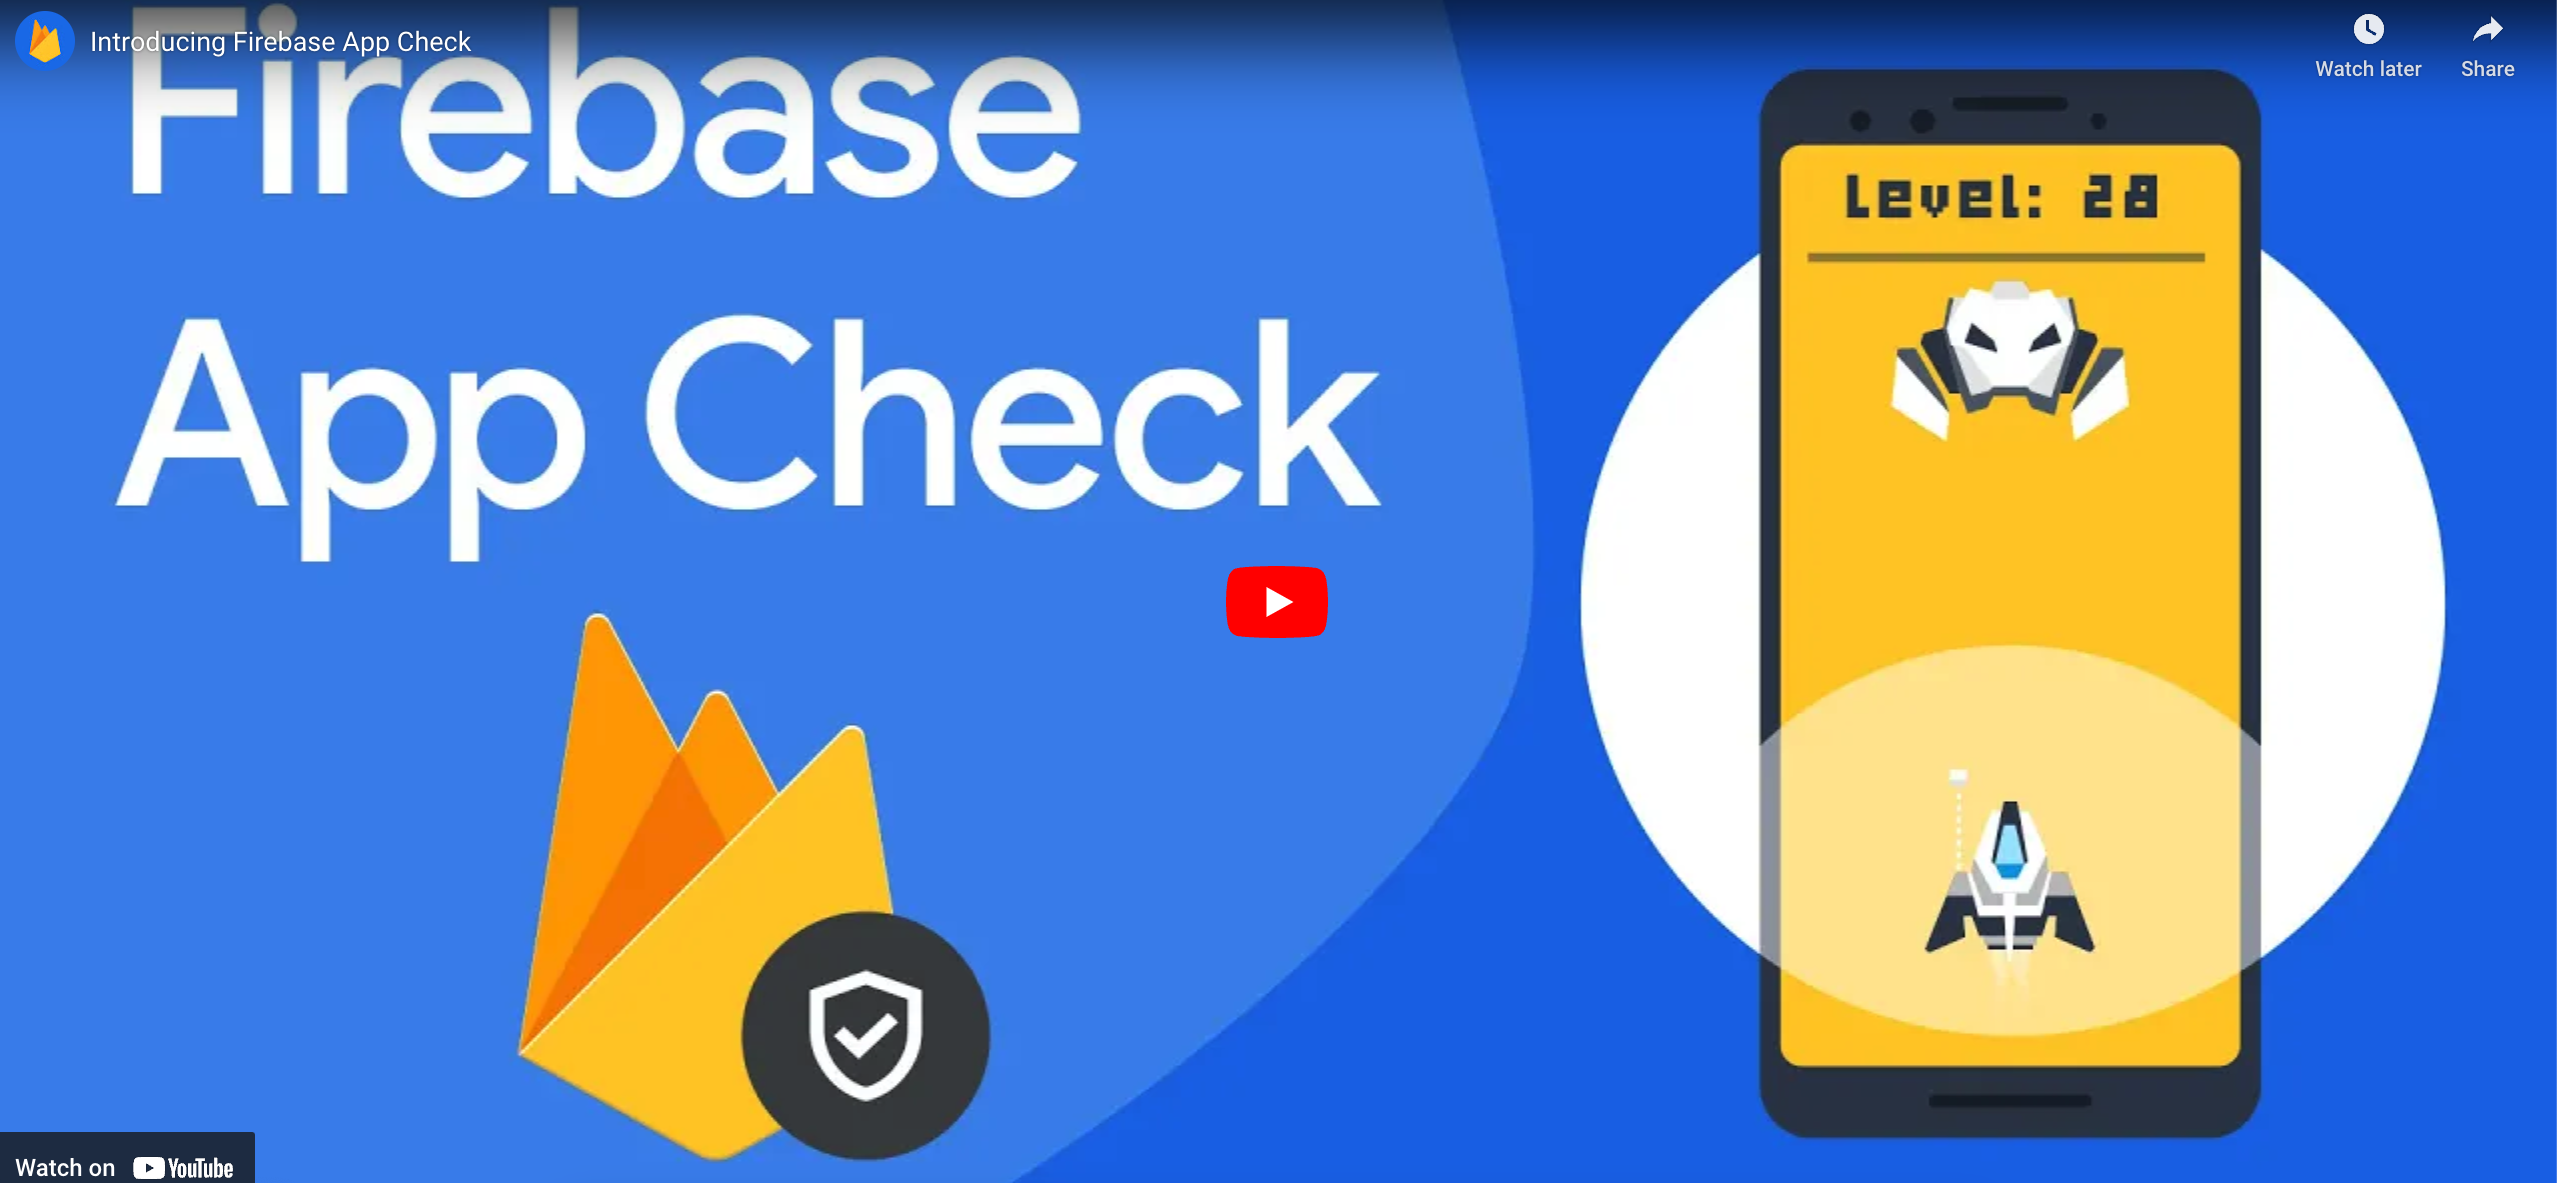 Firebase app check video